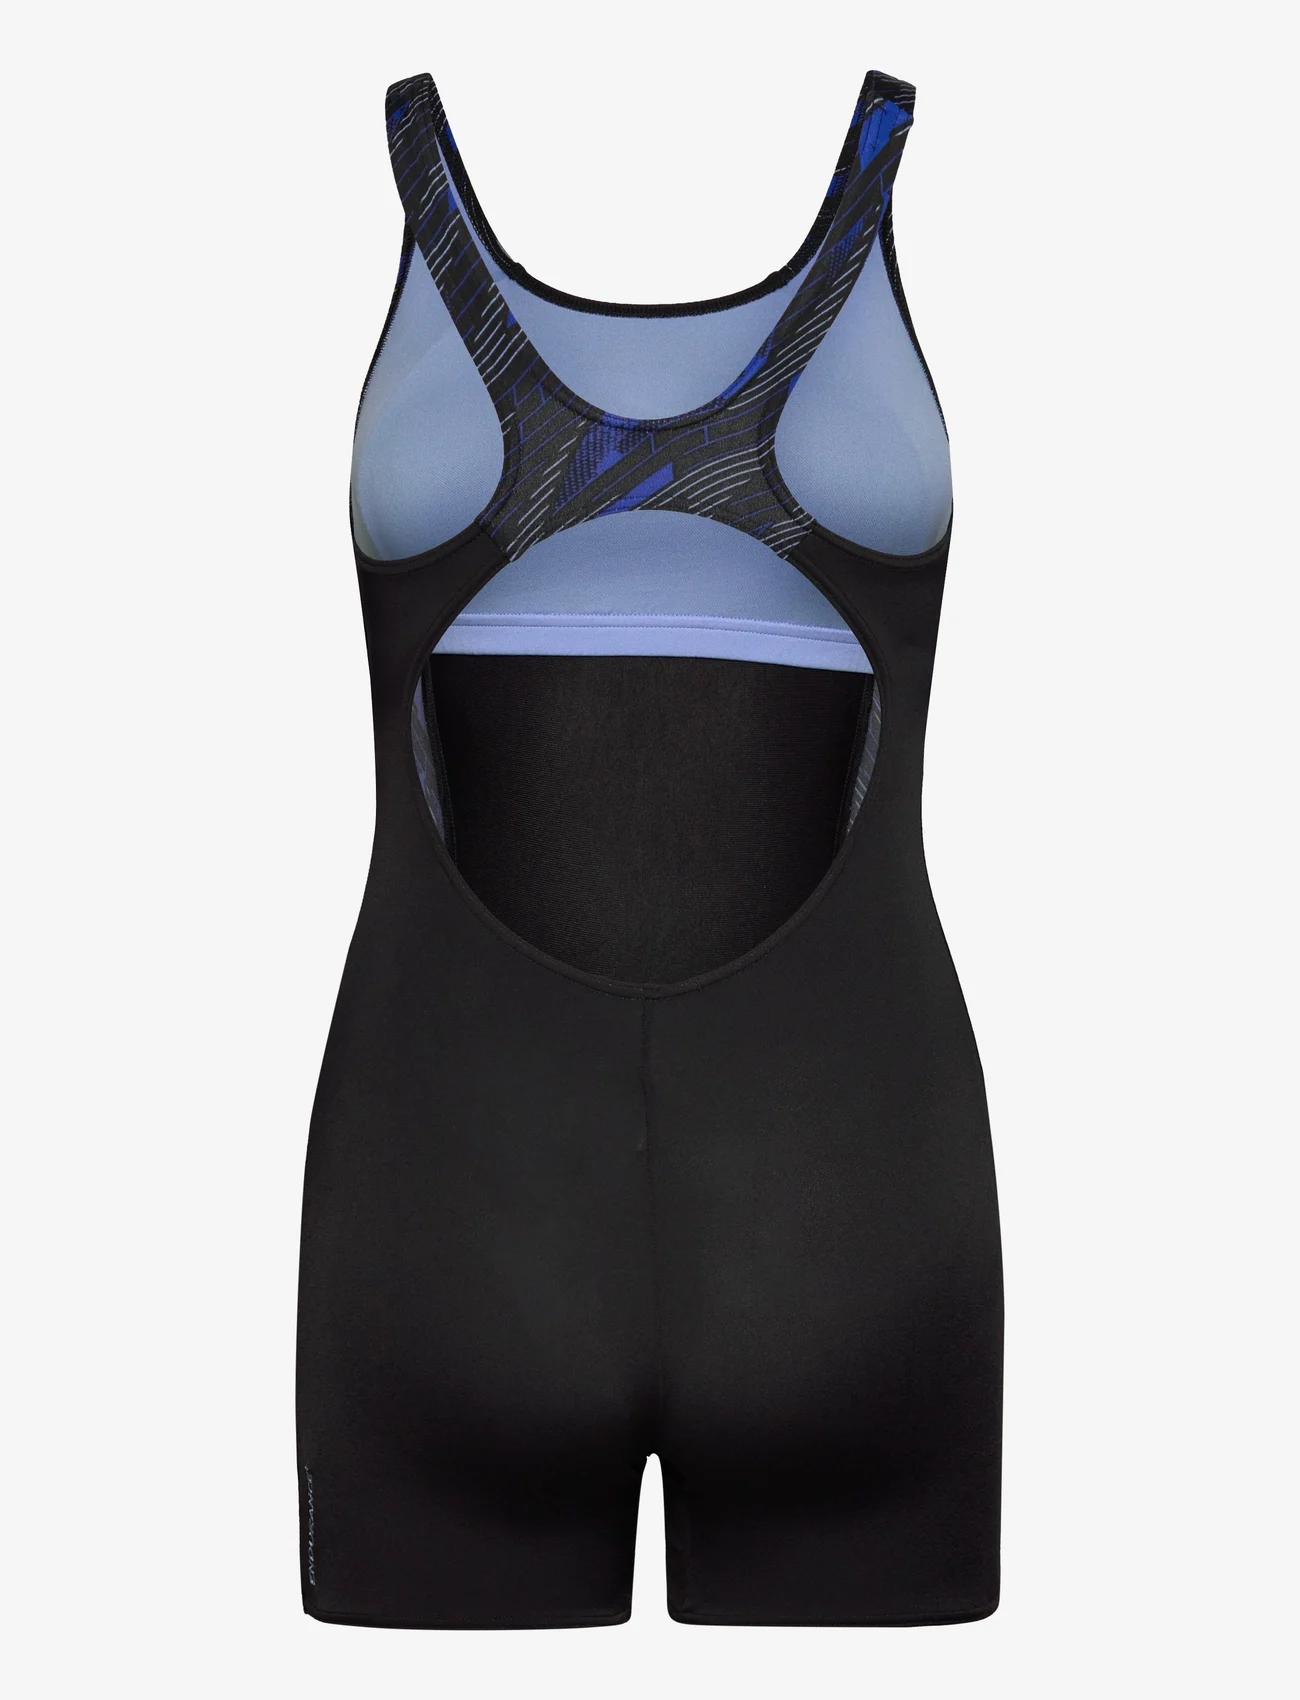 Speedo - Womens HyperBoom Splice Legsuit - uimapuvut - black/blue - 1